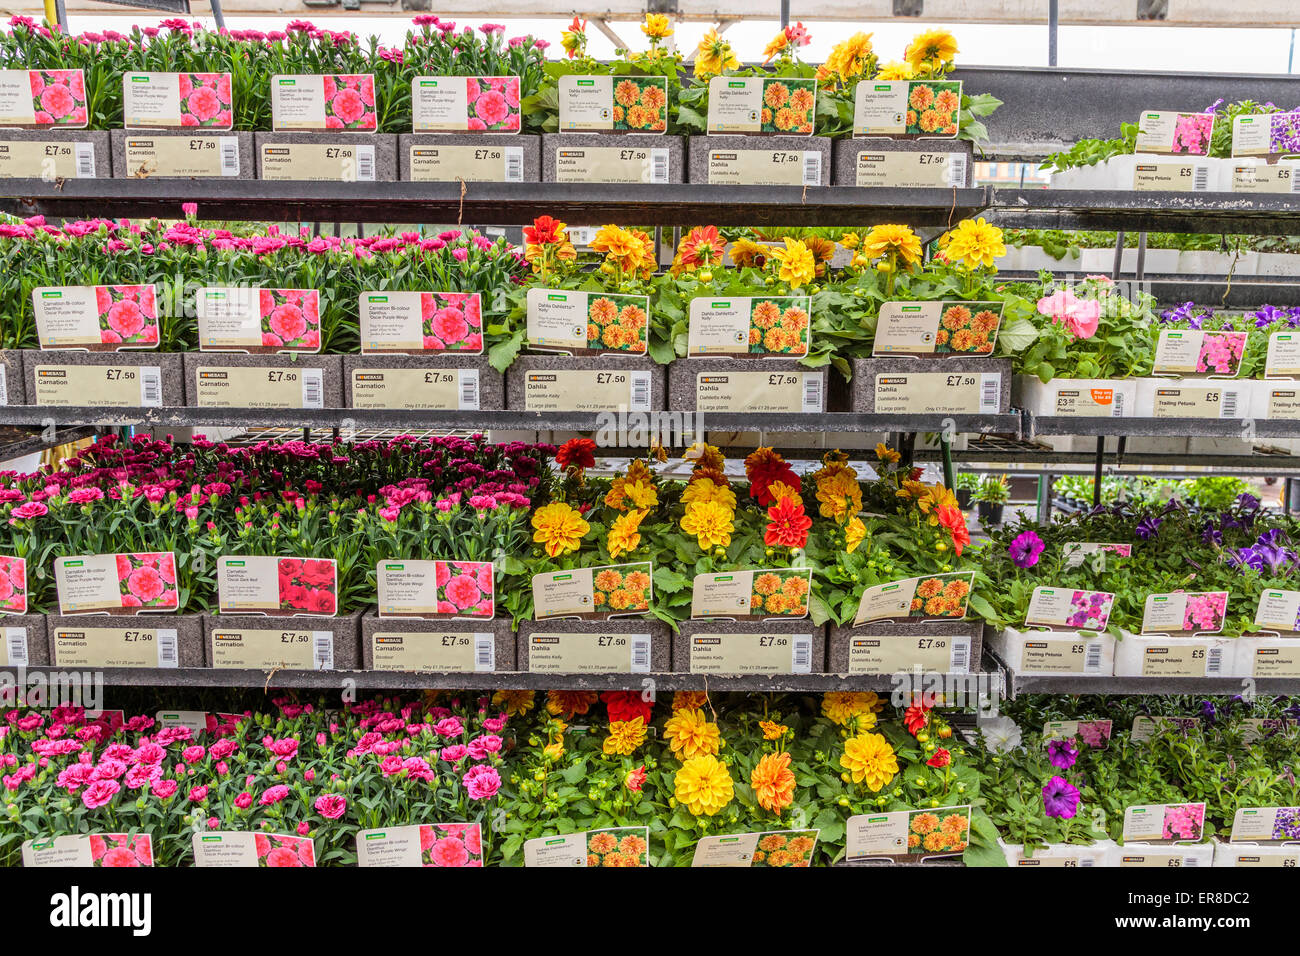 A Homebase Garden Centre showing racks of Carnation and Dahlia plants, London England UK Stock Photo